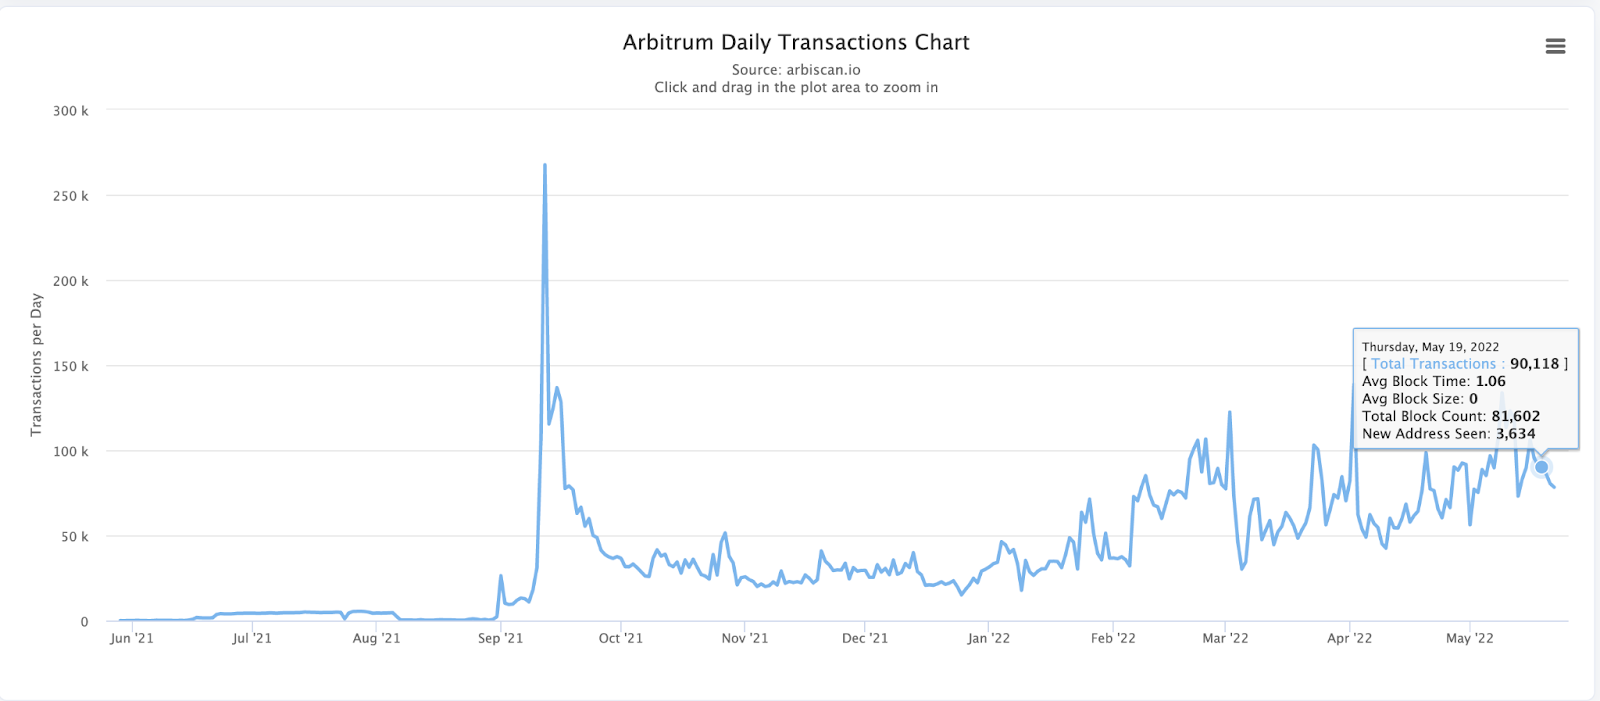 Arbitrum Daily Transactions Chart